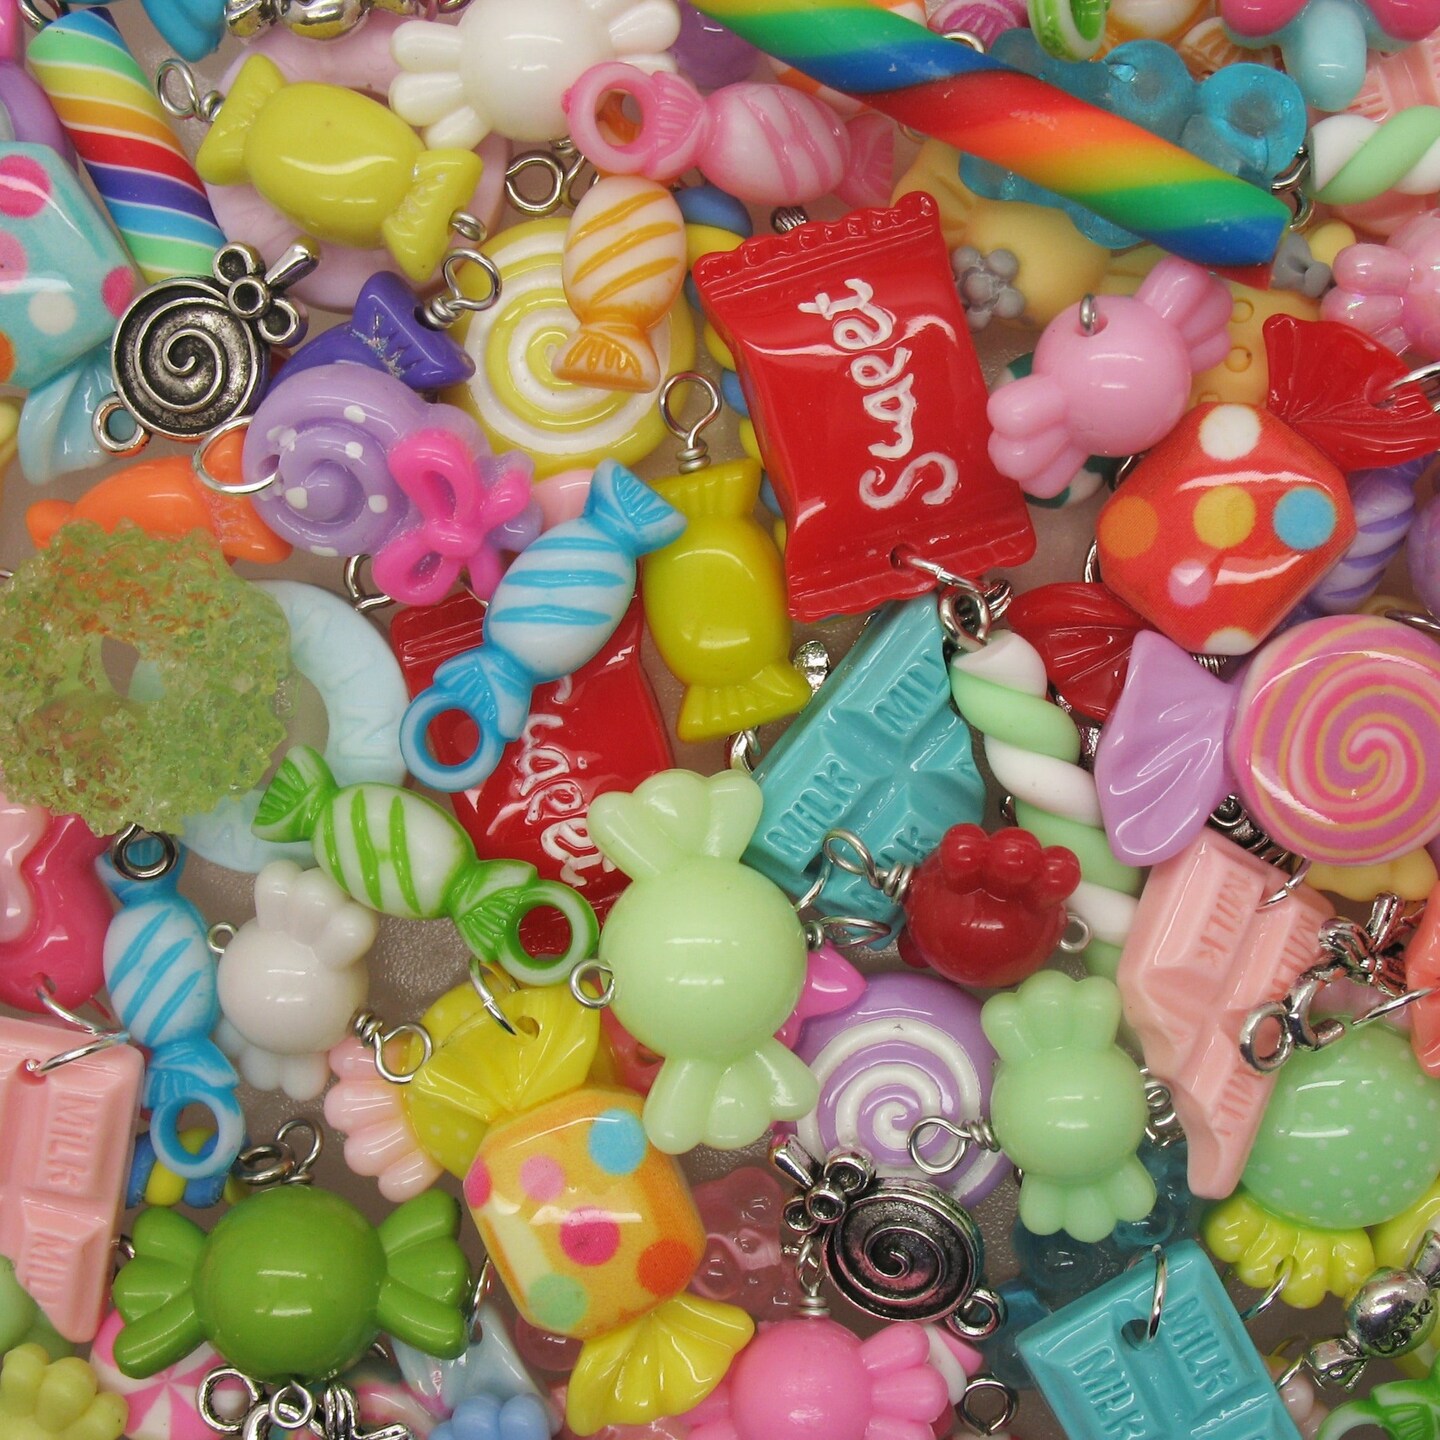 Candy Charms, Grab Bag Mix, 25-50 pieces of Cute Kawaii Food